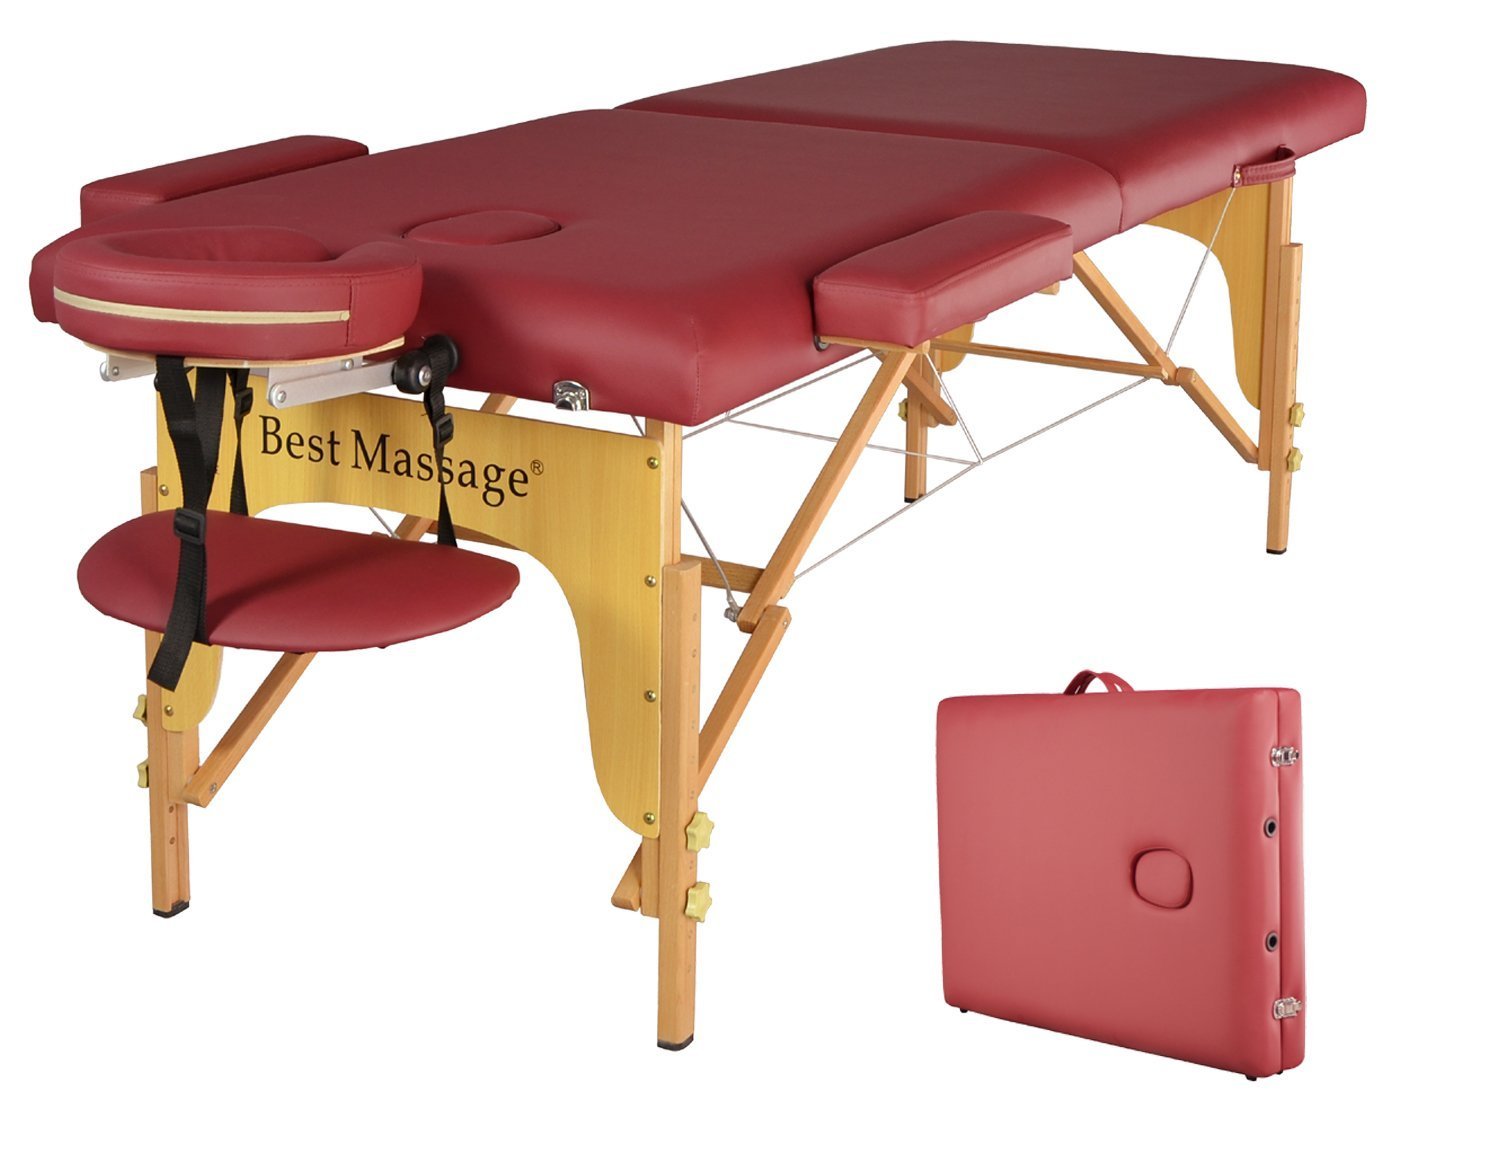 Массажный стол бу. Массажный стол Ferrox via Crevada 85. Redcord массажный стол. Массажный стол best massage. Массажный стол с отверстием для живота.